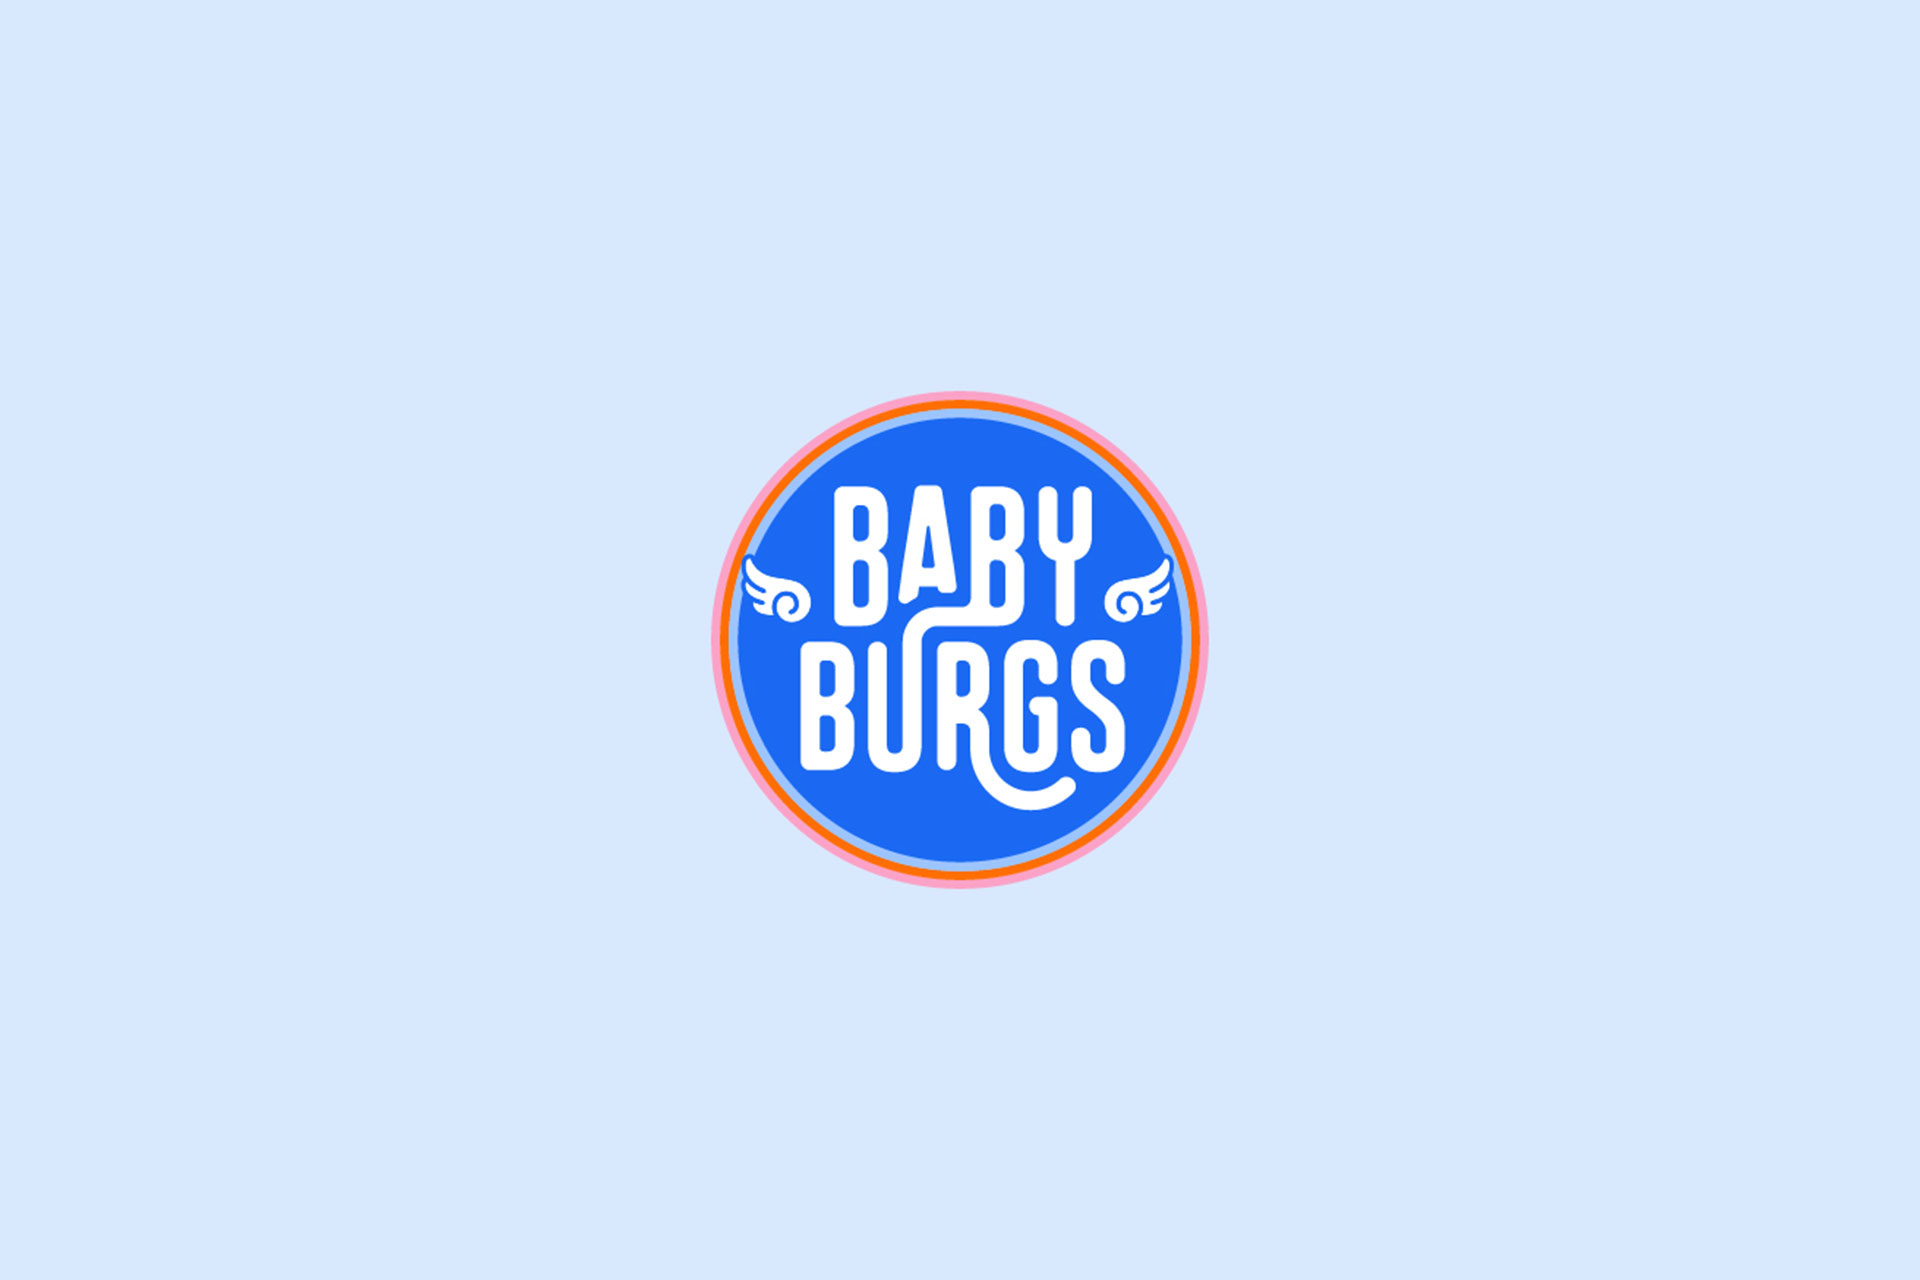 Babyburgs restaurant branding by Z Creative Studio Branding & Graphic Design Melbourne